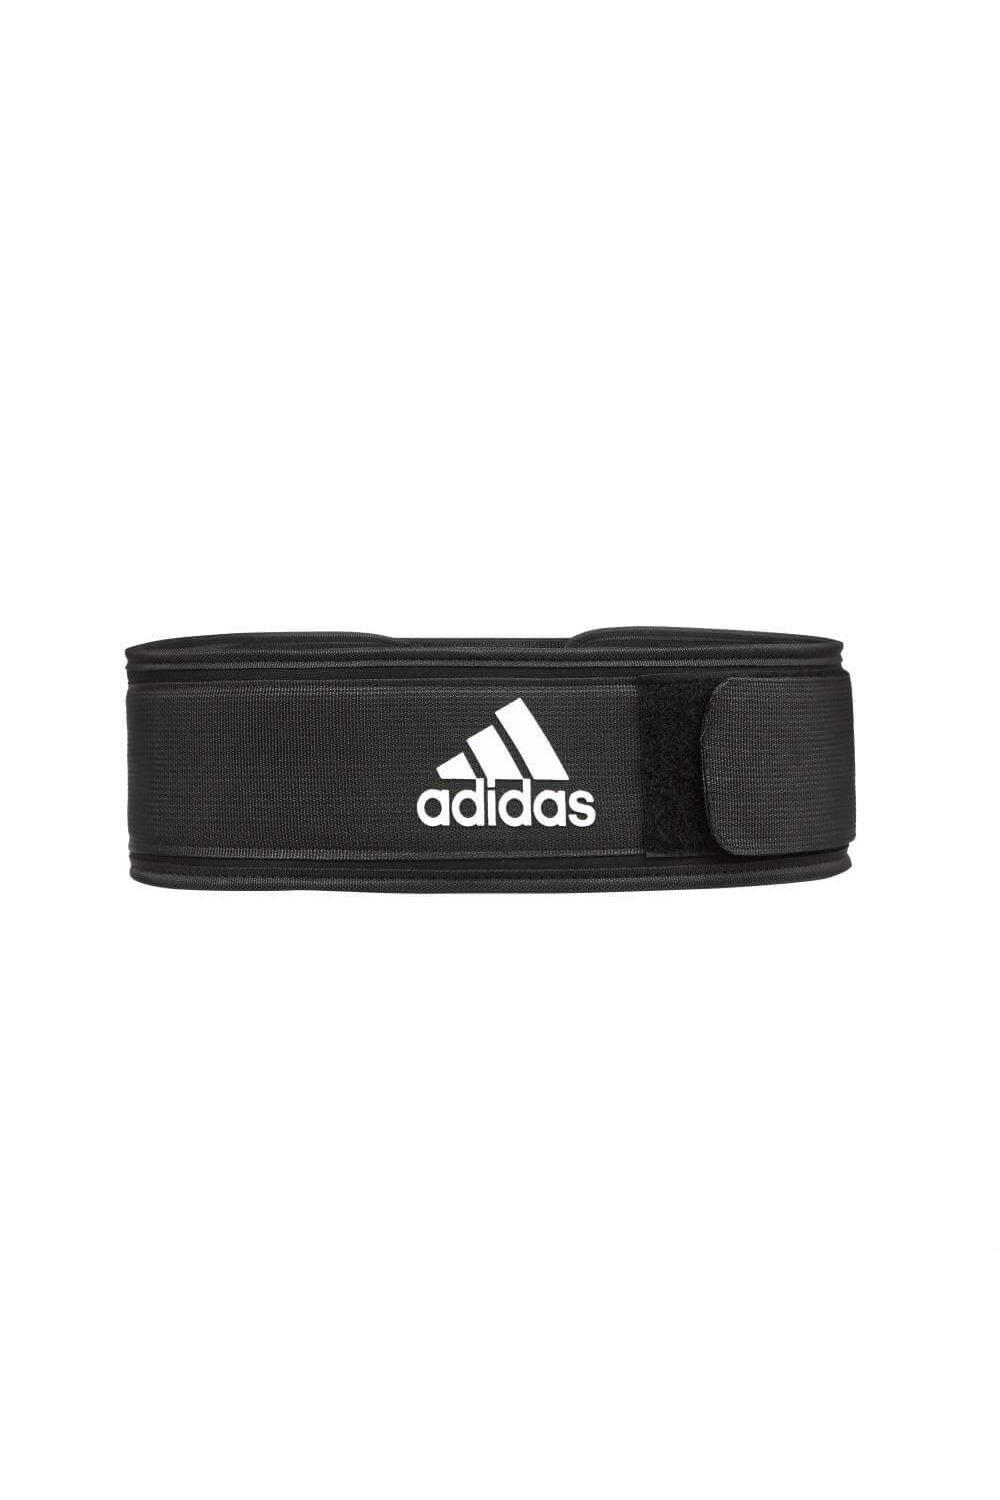 Adidas Essential Weight Lifting Belt|Size: L|black